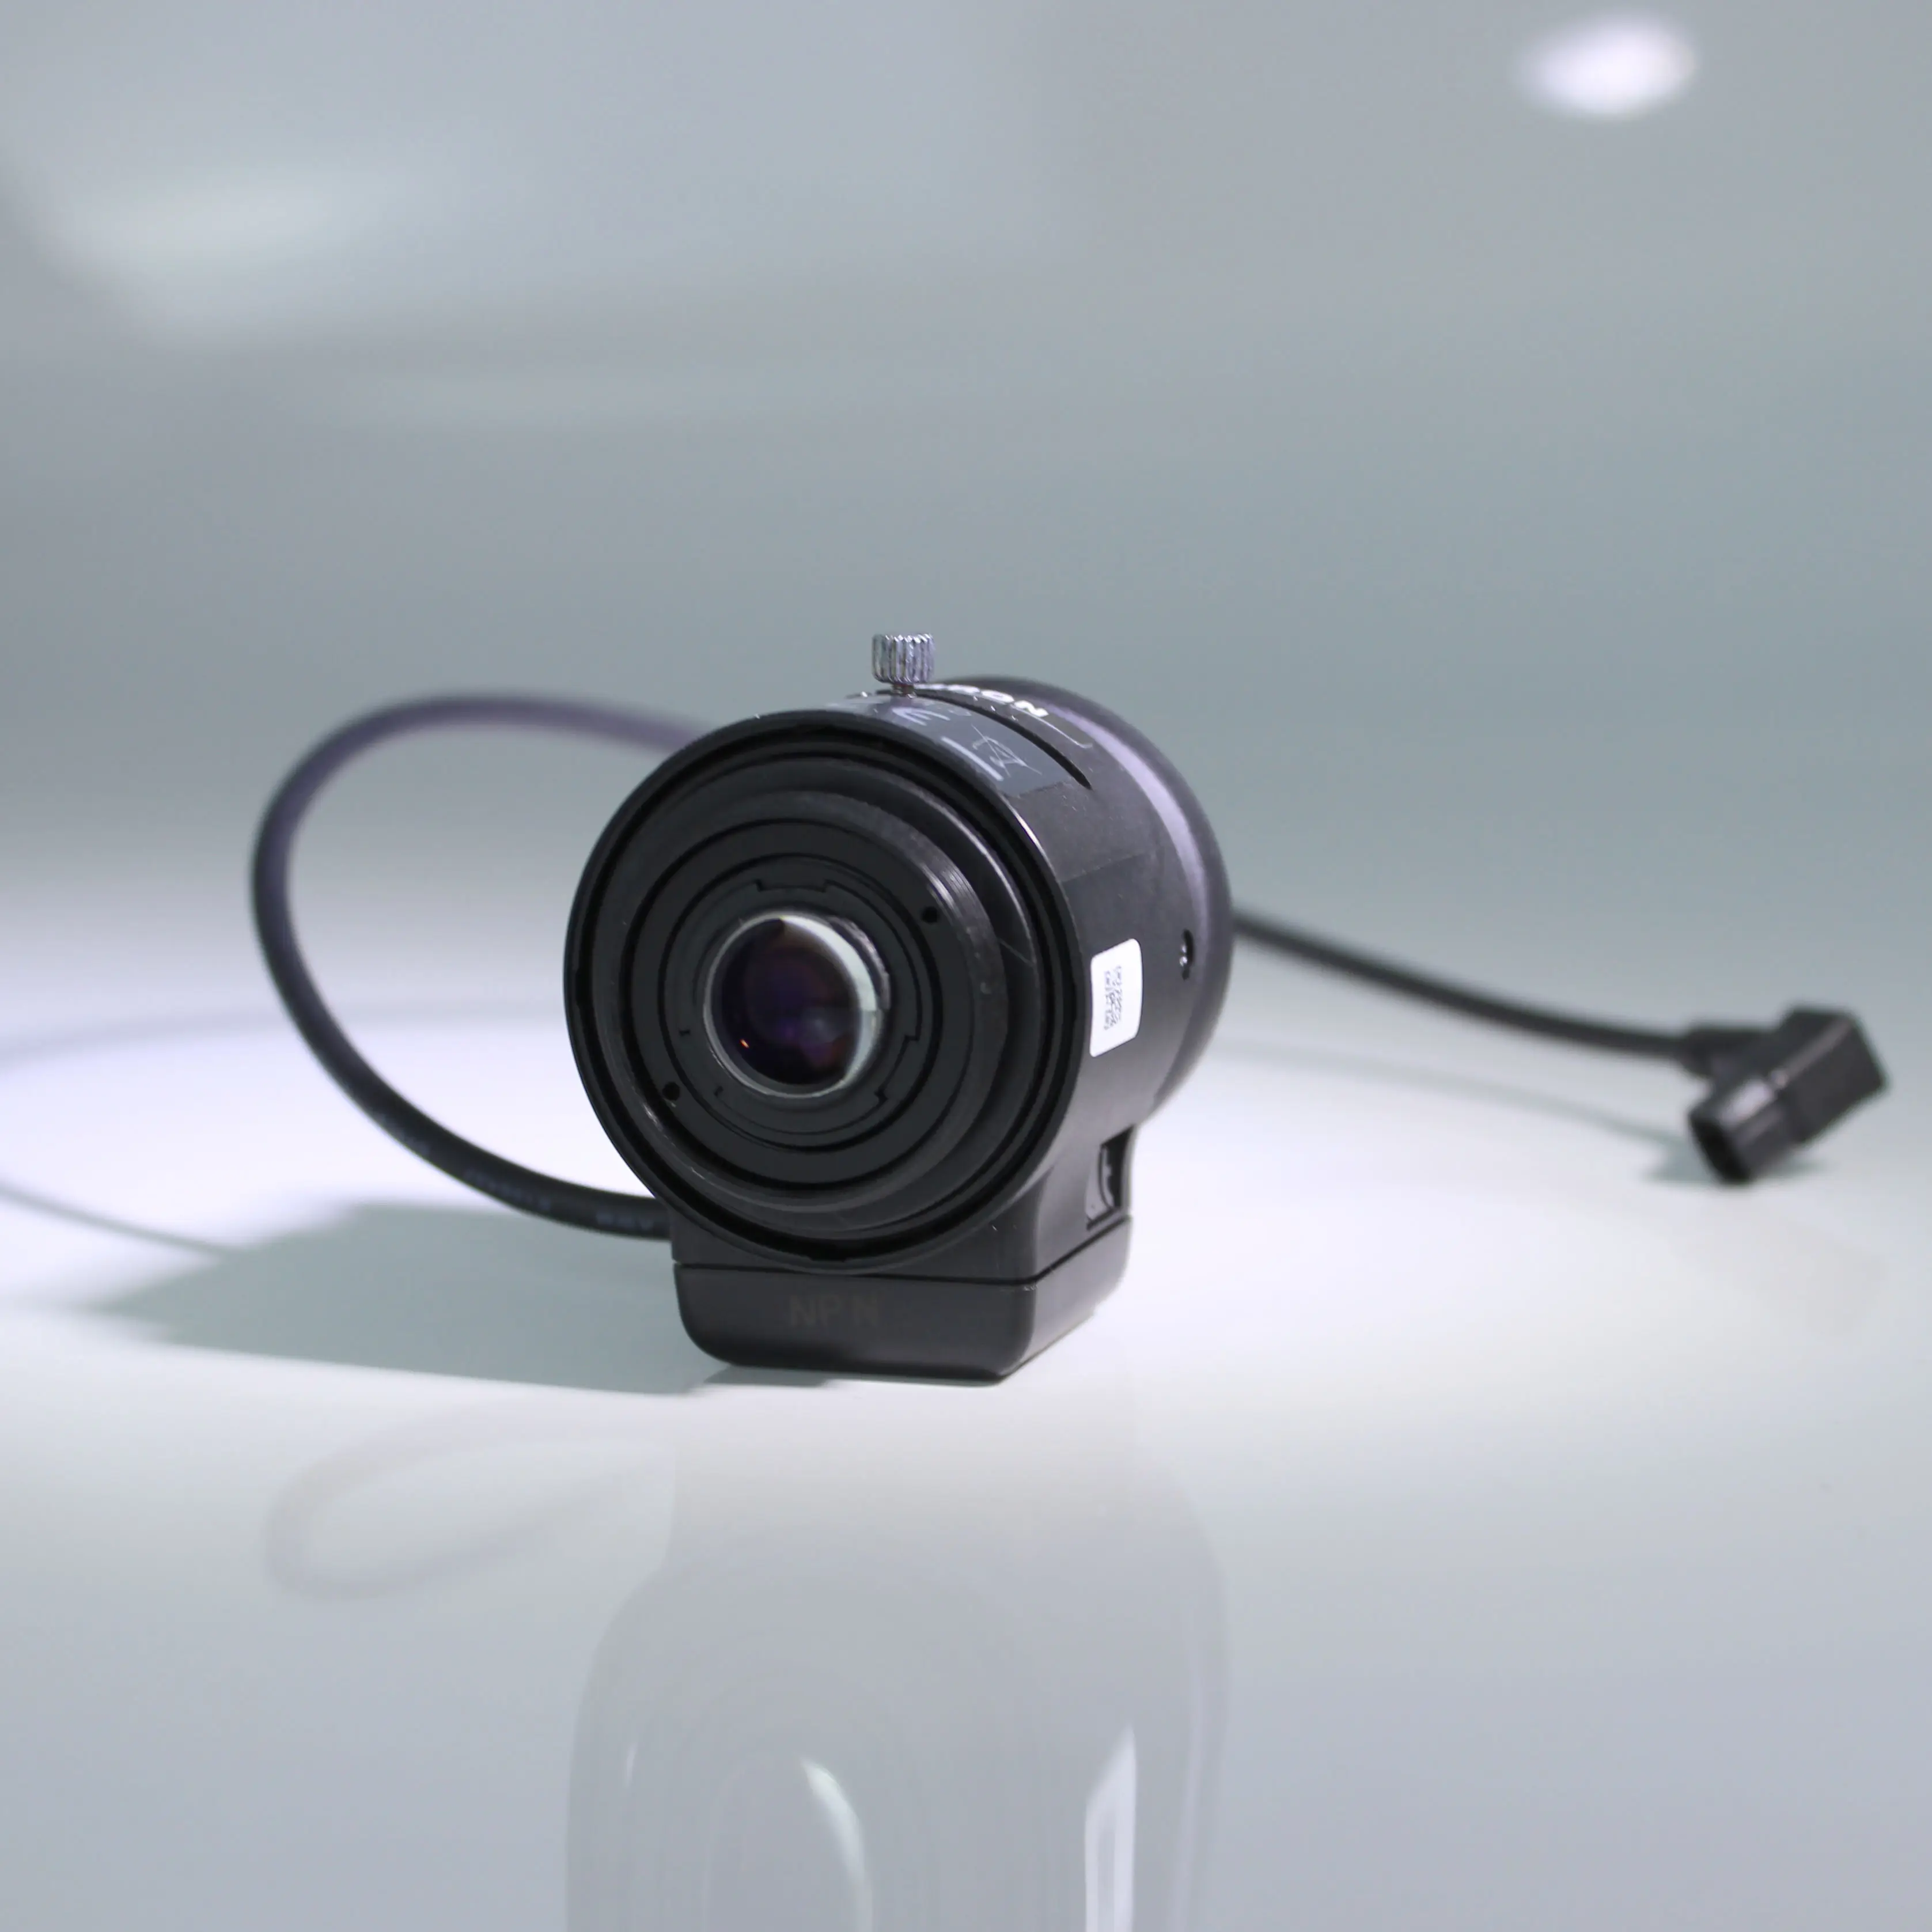 Caméra de vidéosurveillance à objectif Tamron IR à monture CS, objectif varifocal 13FG28IR